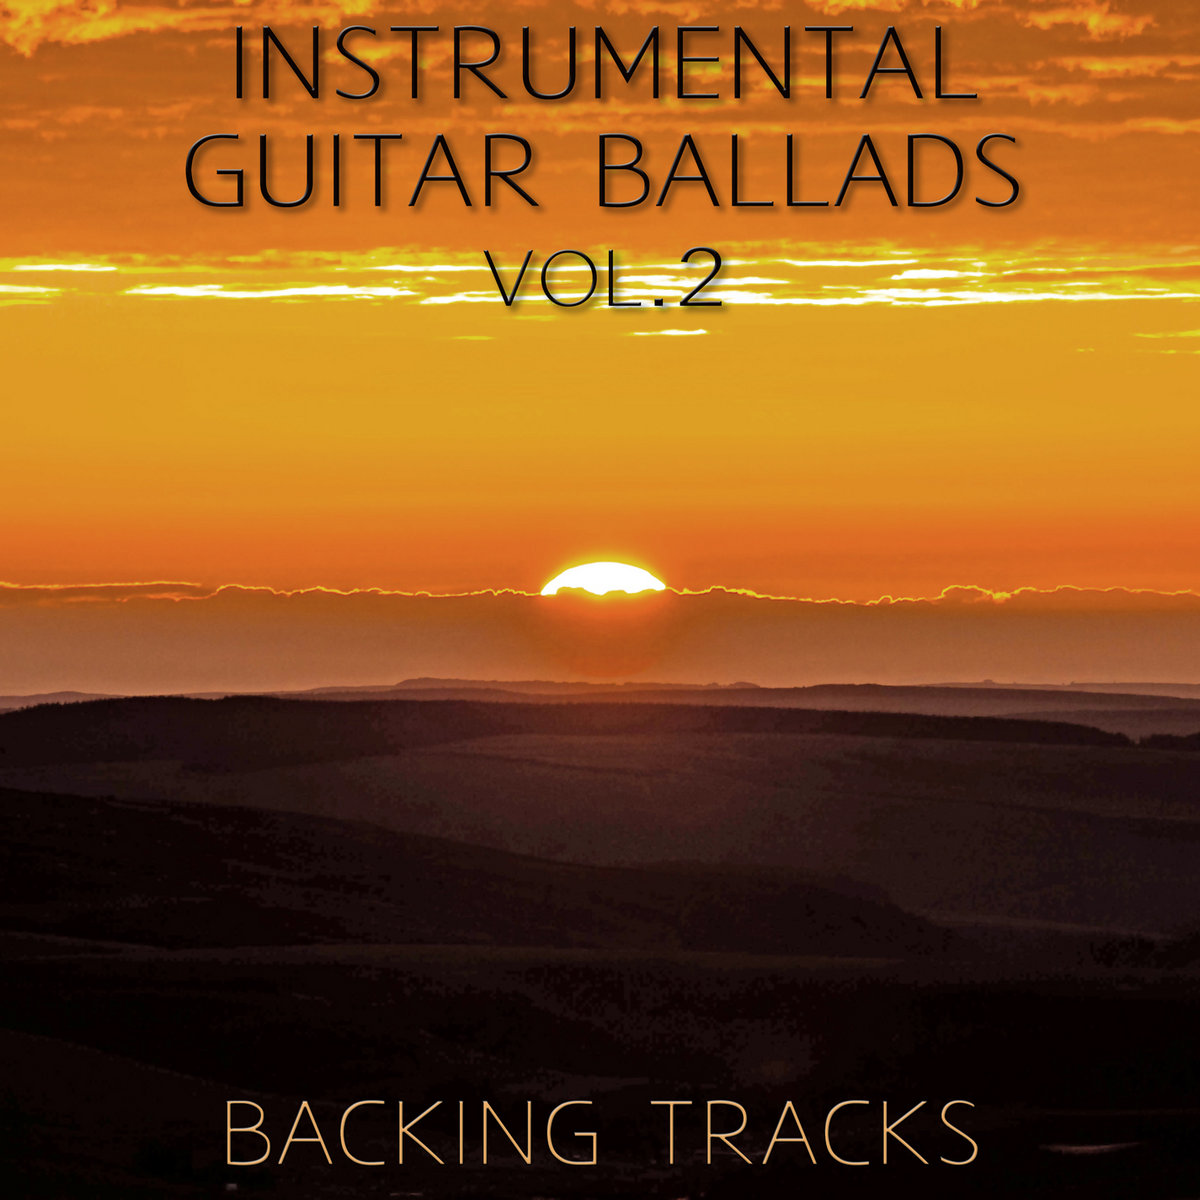 Slow Instrumental Acoustic Guitar Backing Track | Nick Neblo 